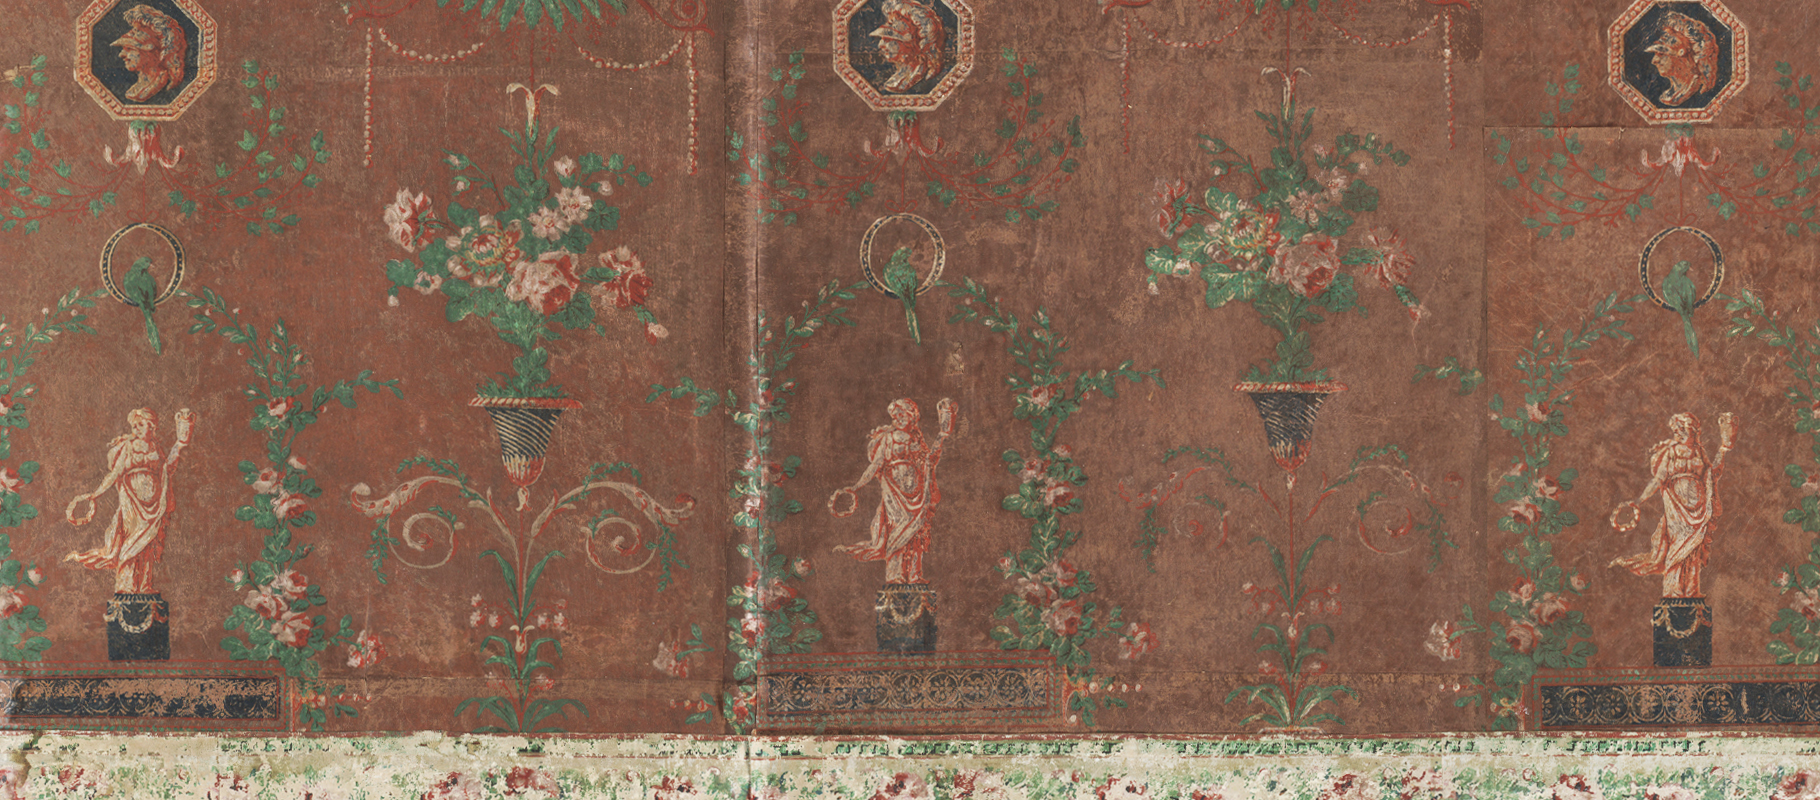 late 18th century wallpaper